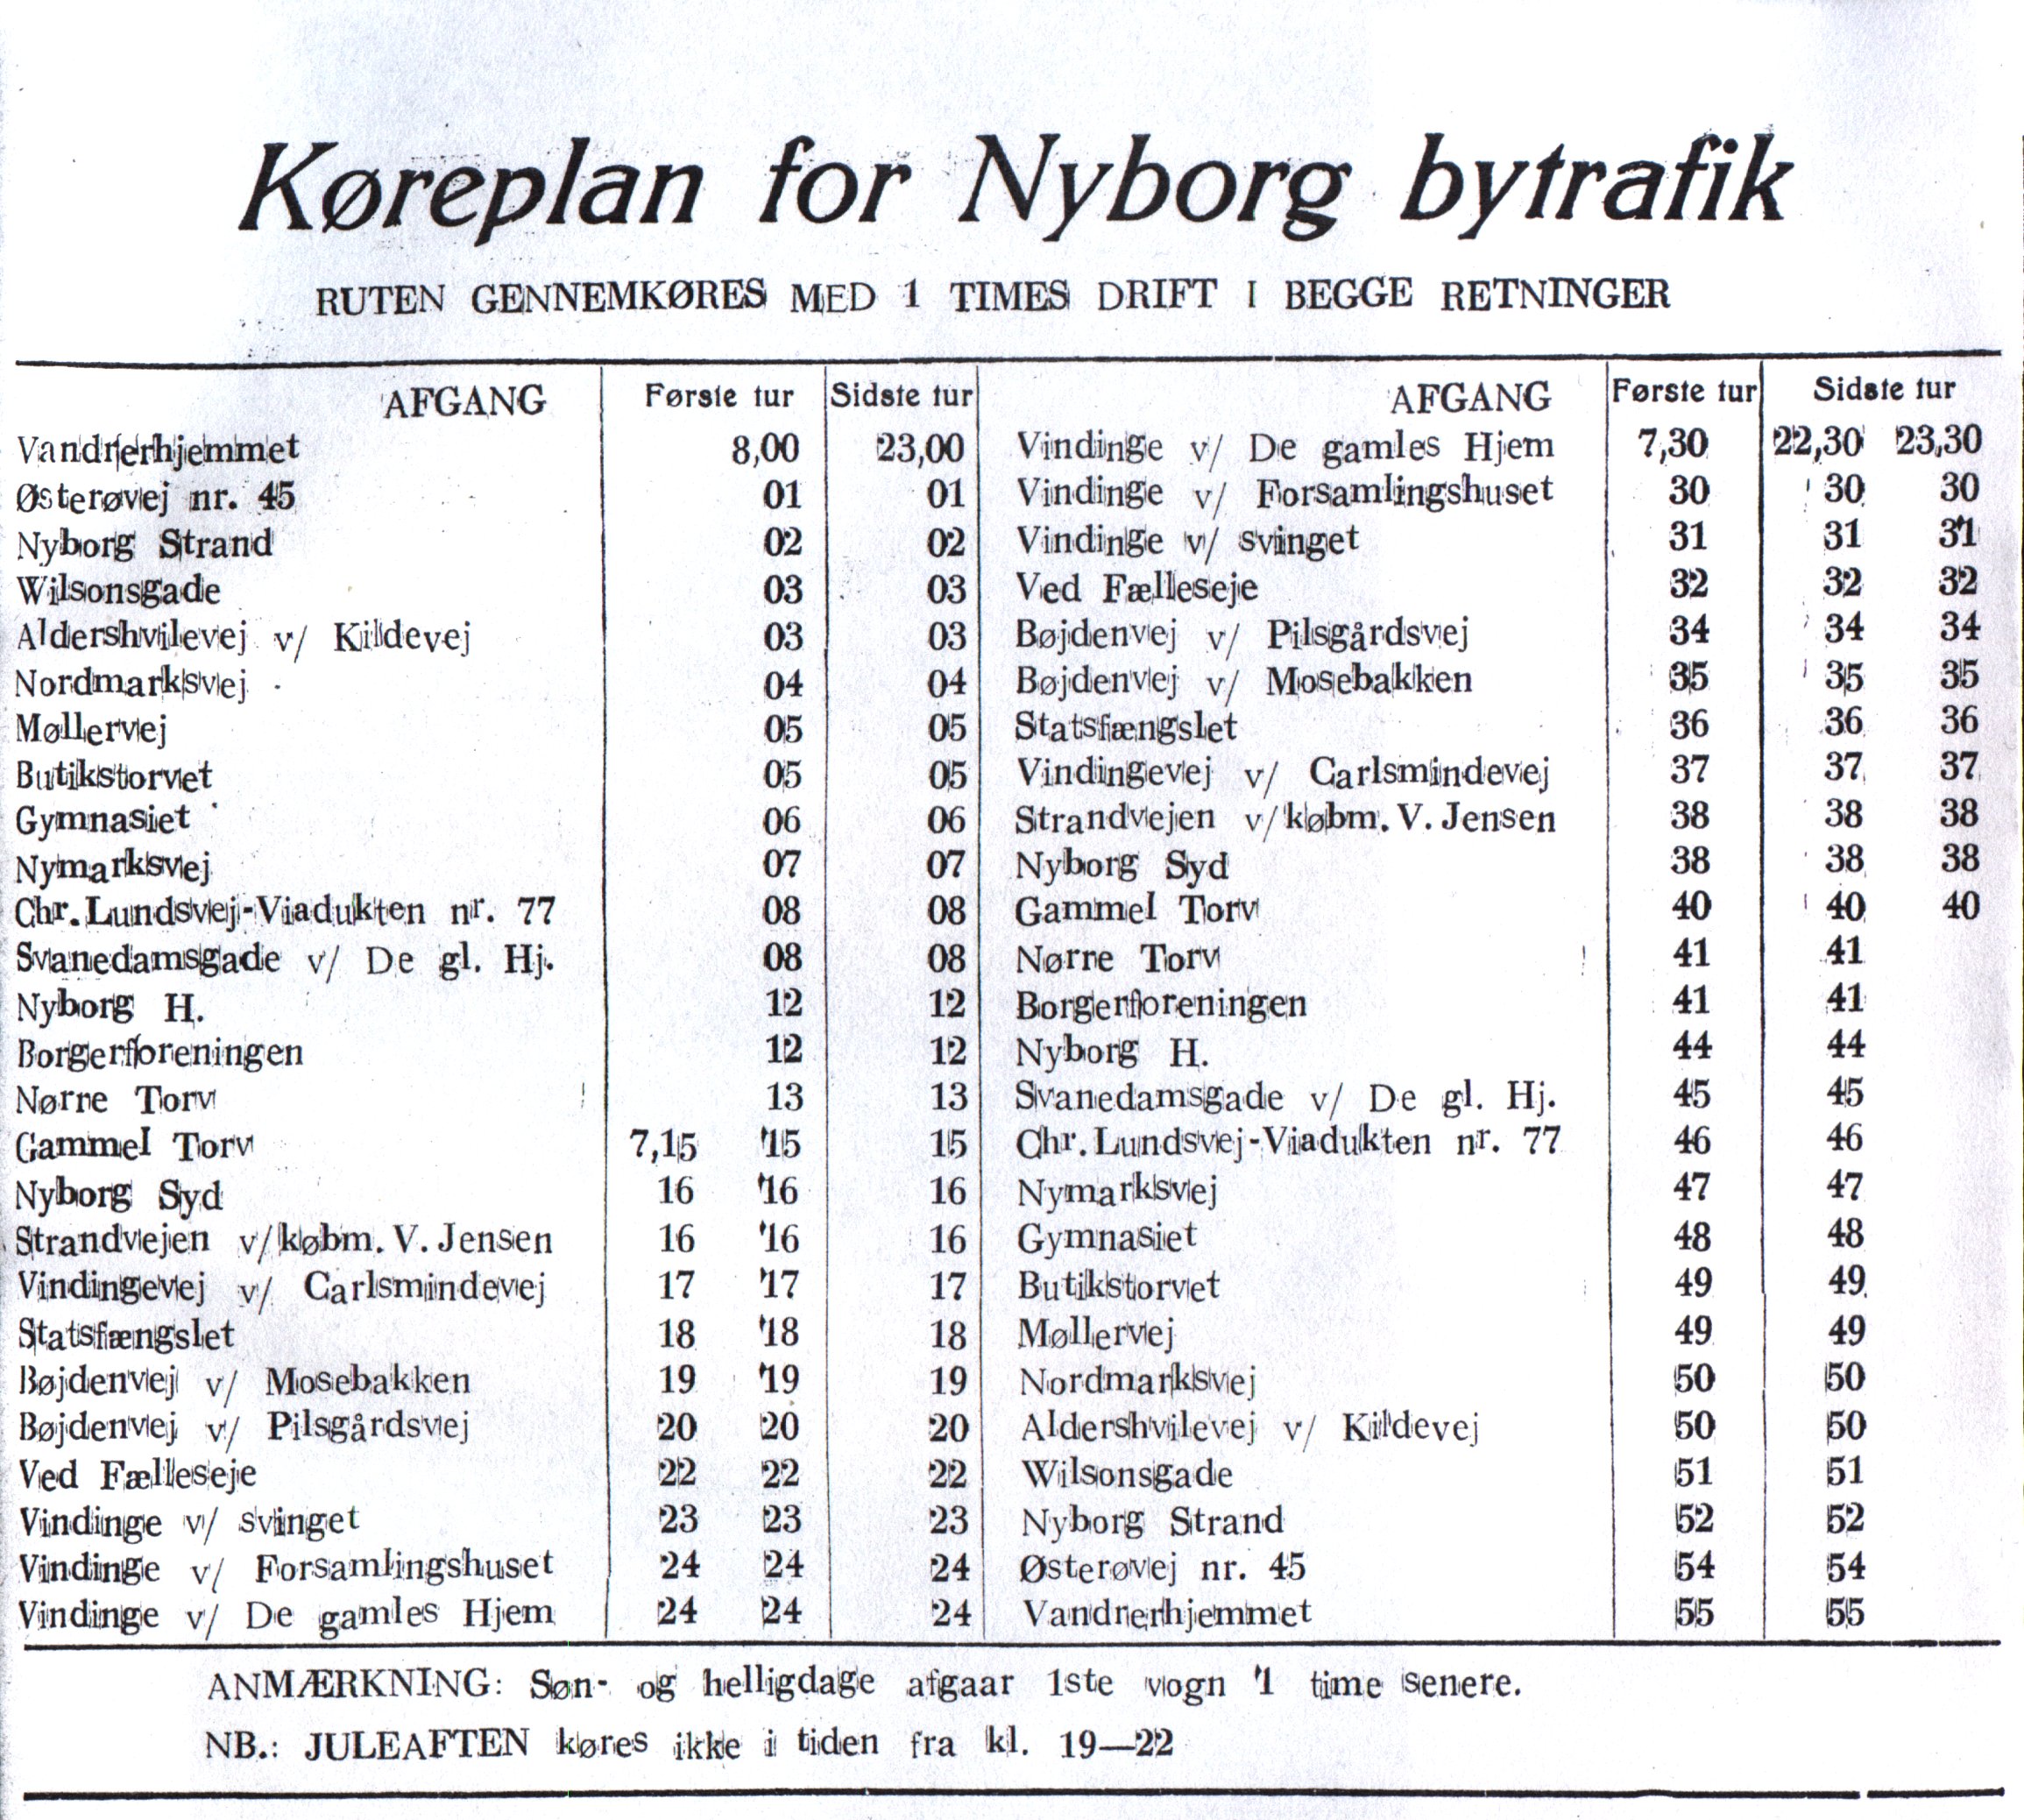 Nyborg Bytrafik Køreplan, 1961